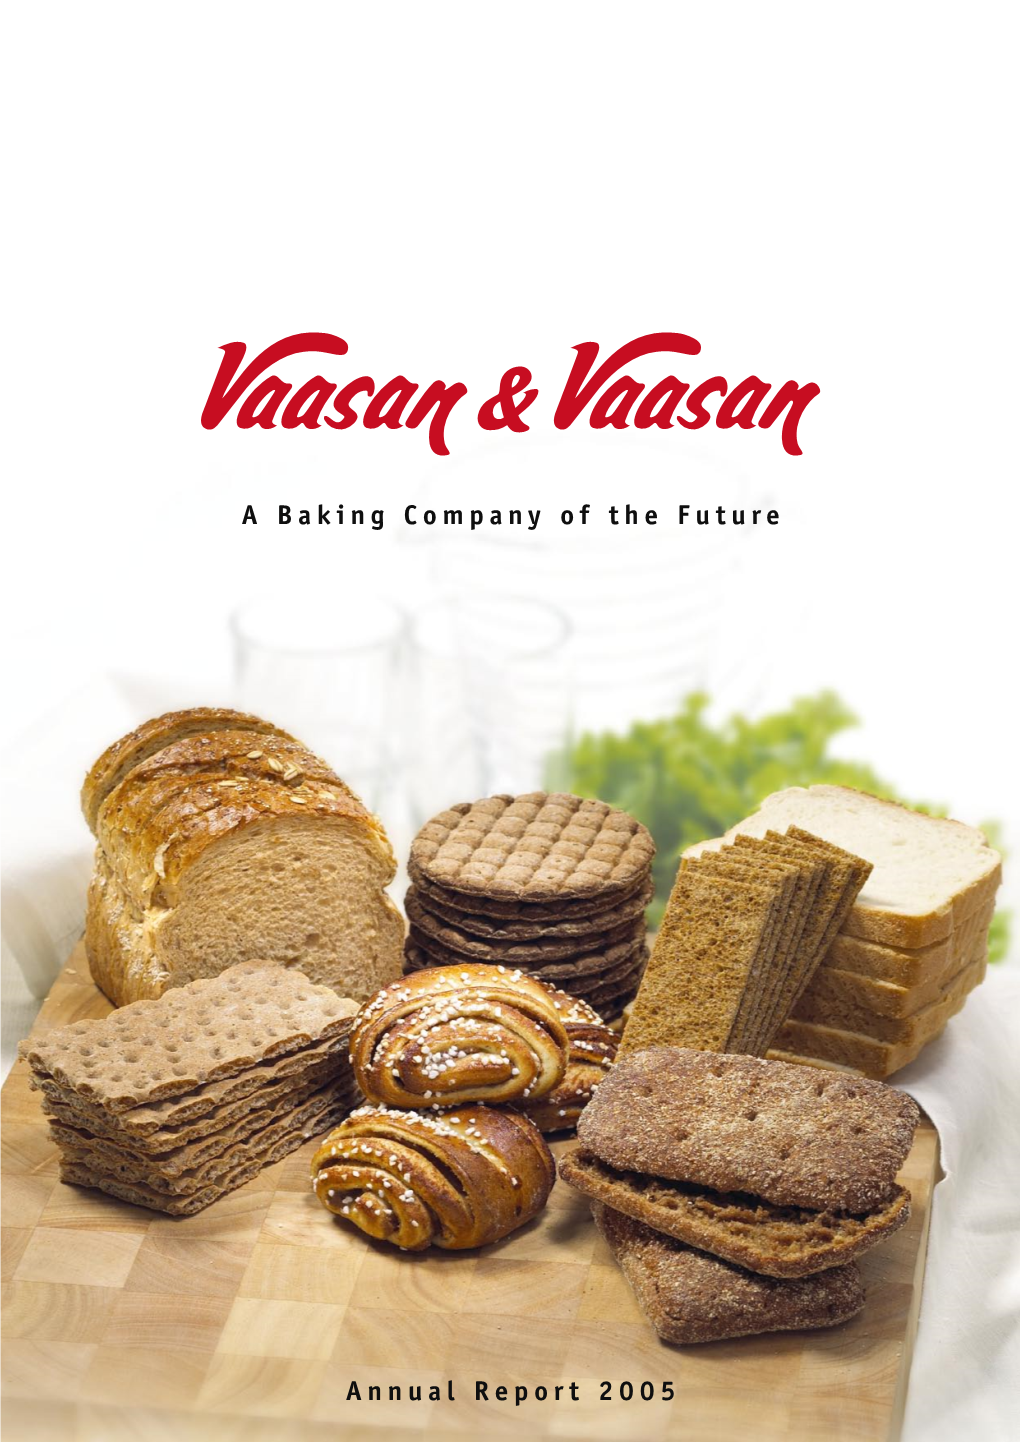 Vaasan & Vaasan Annual Report 2005